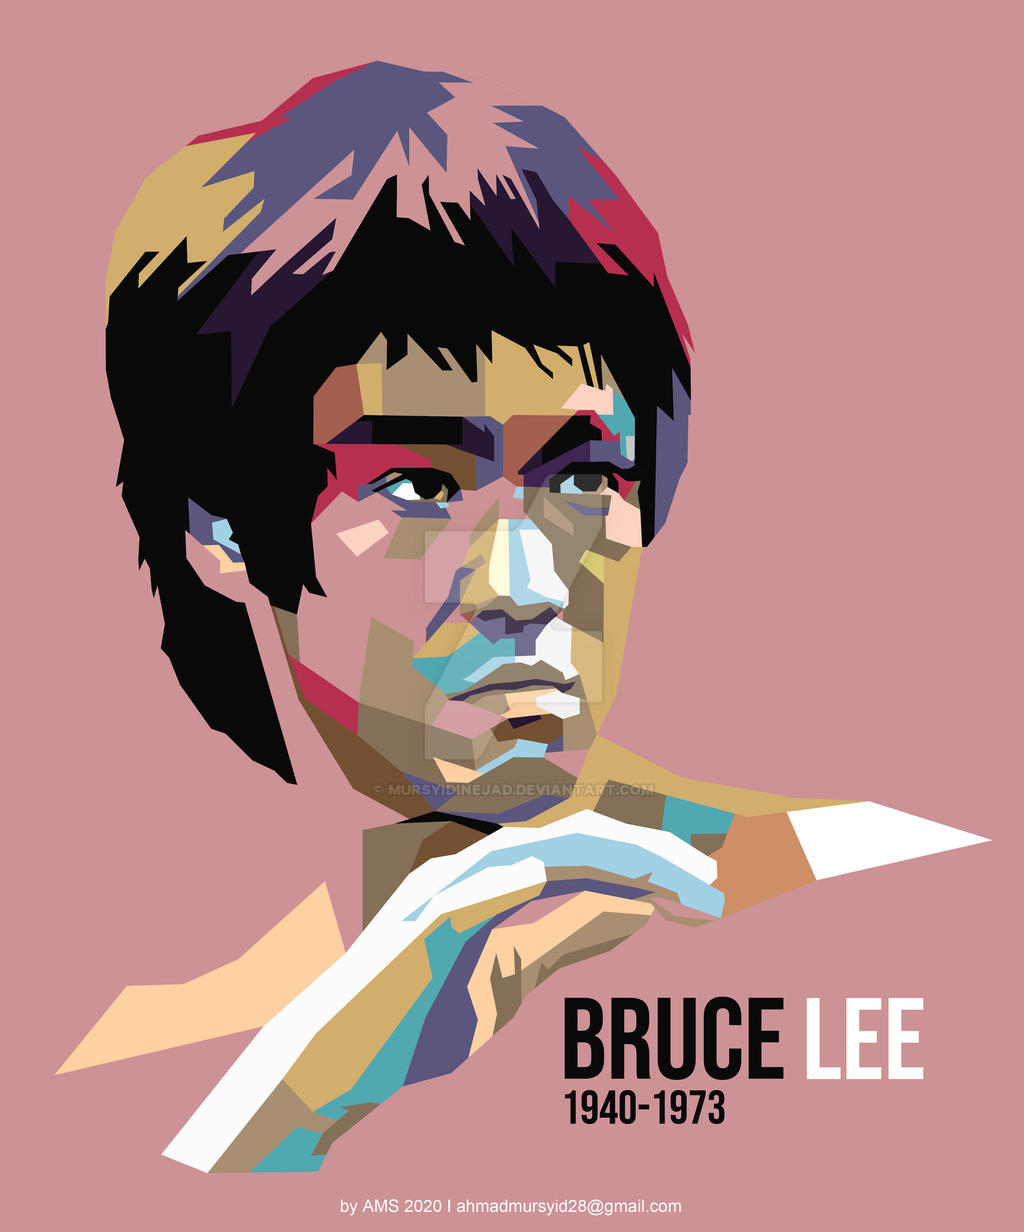 Bruce Lee in WPAP by Mursyidinejad on DeviantArt